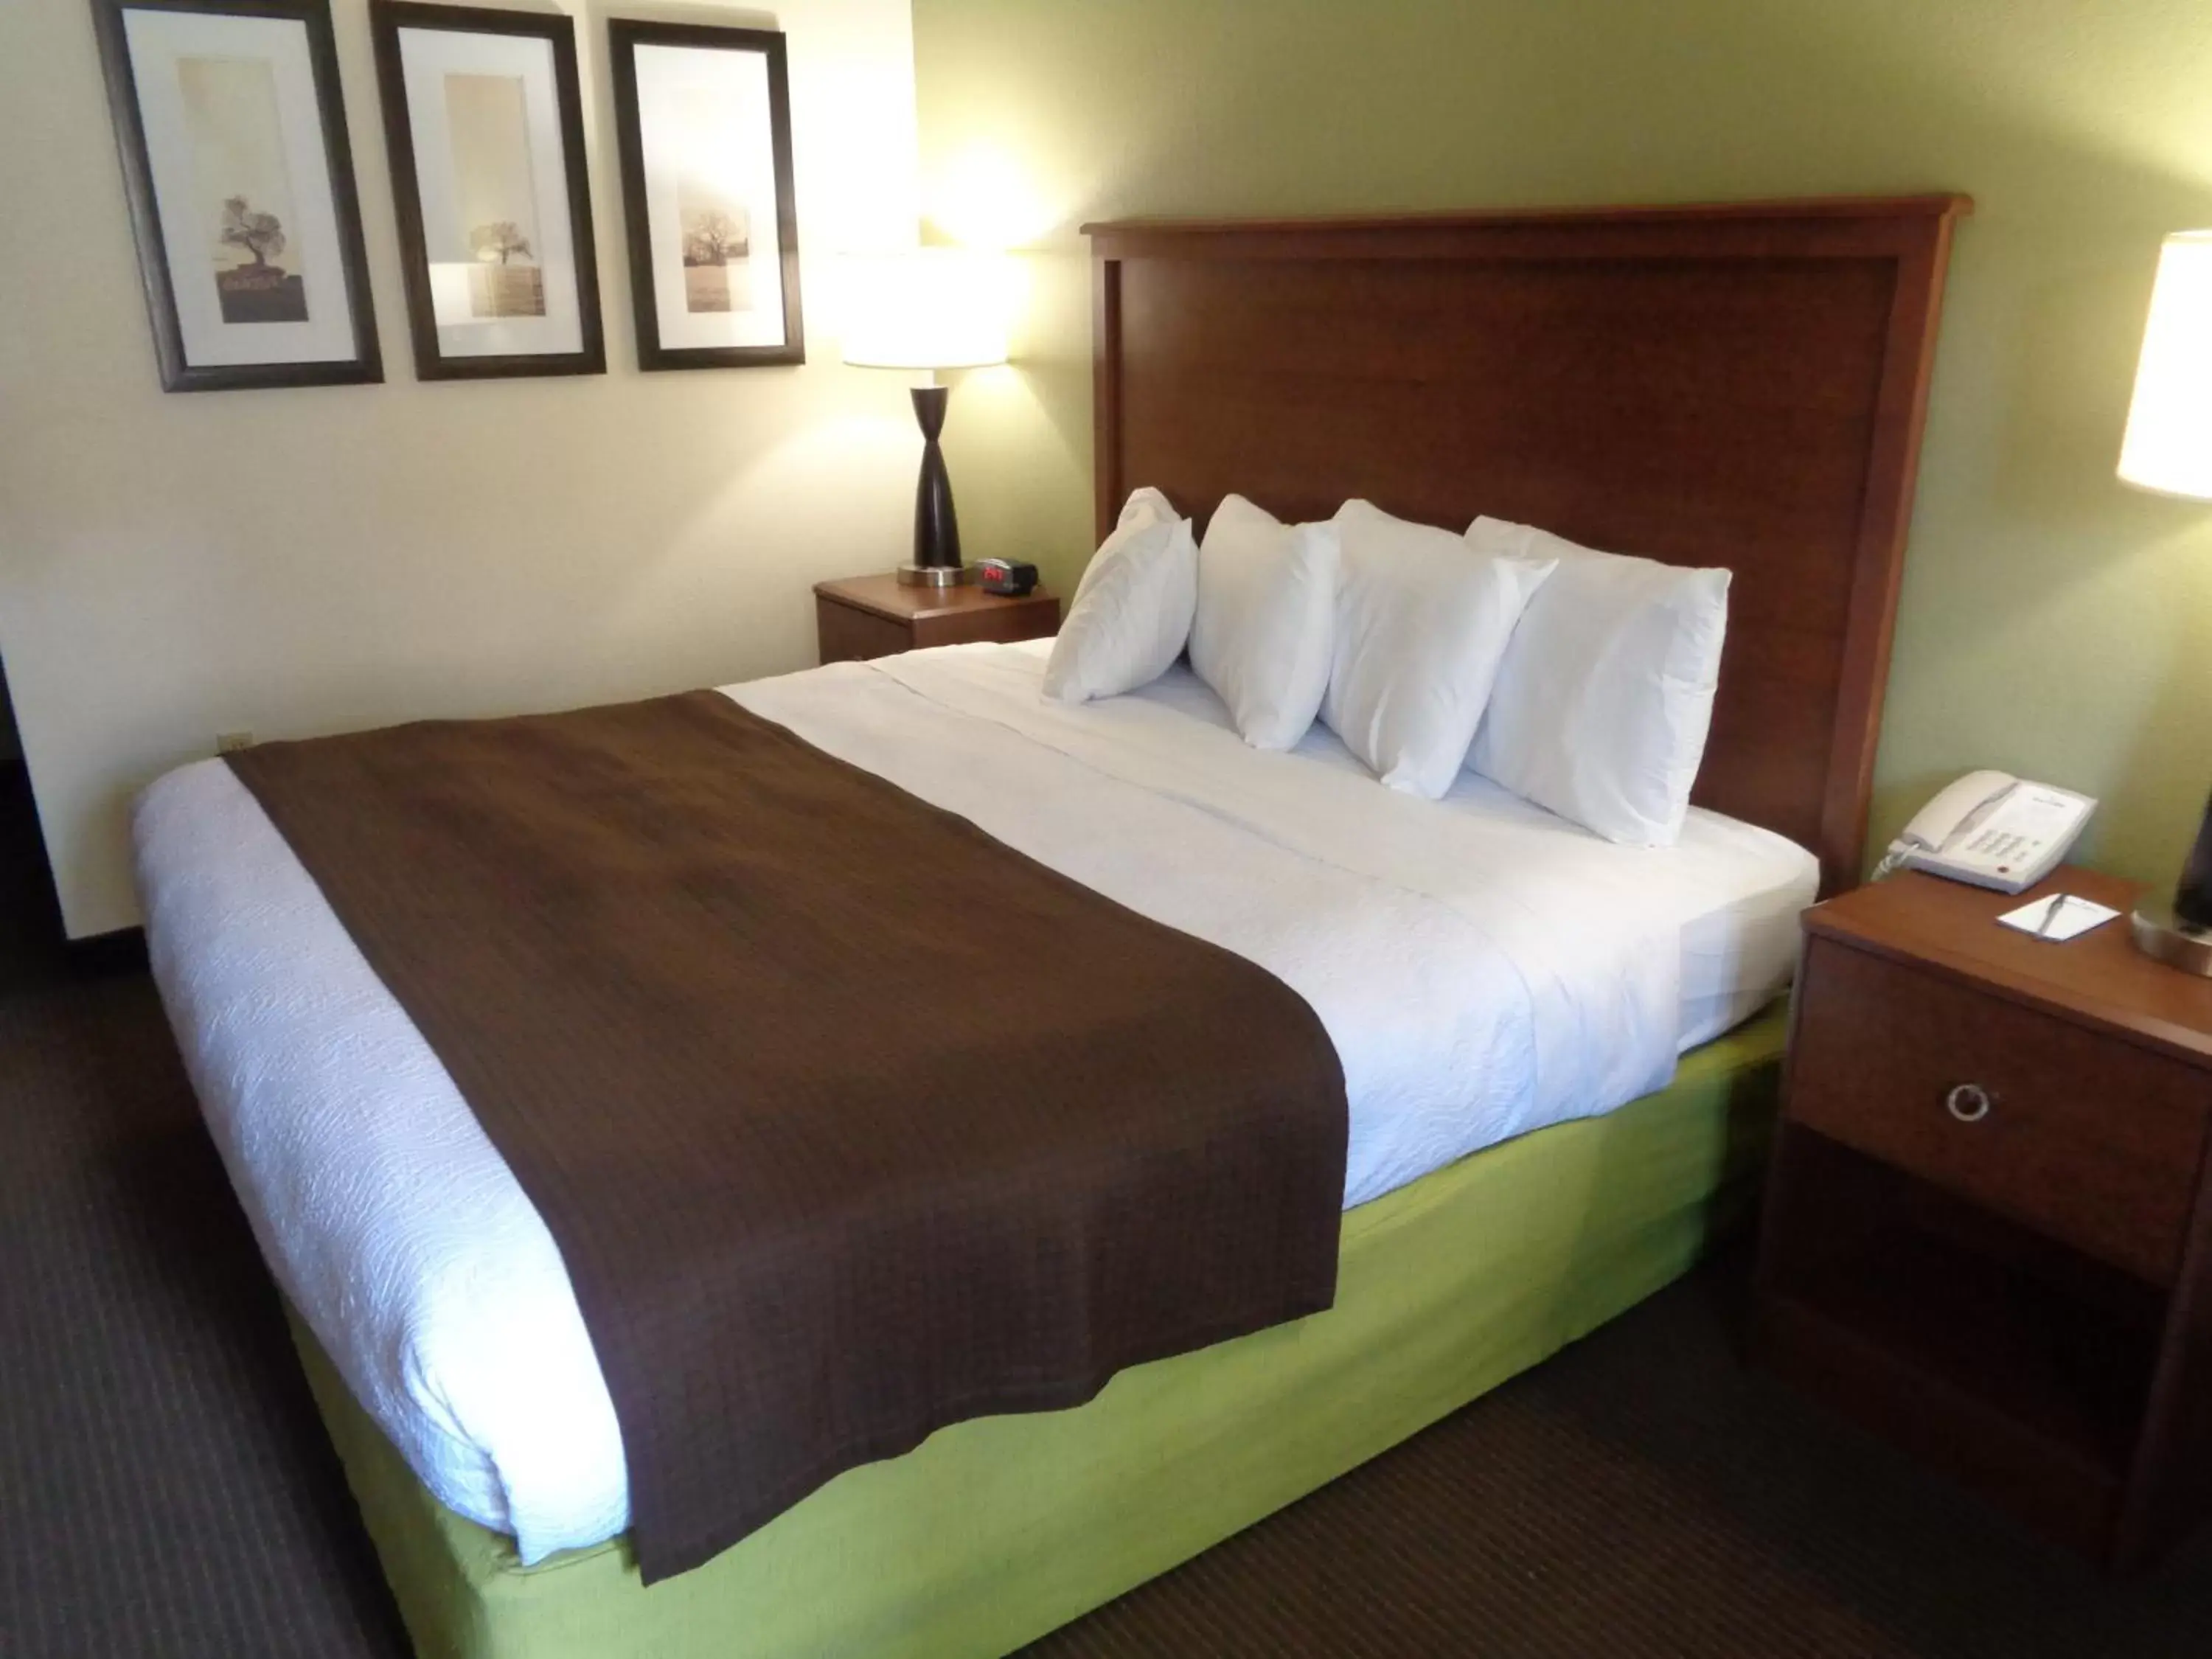 Bed in AmericInn by Wyndham Grand Rapids